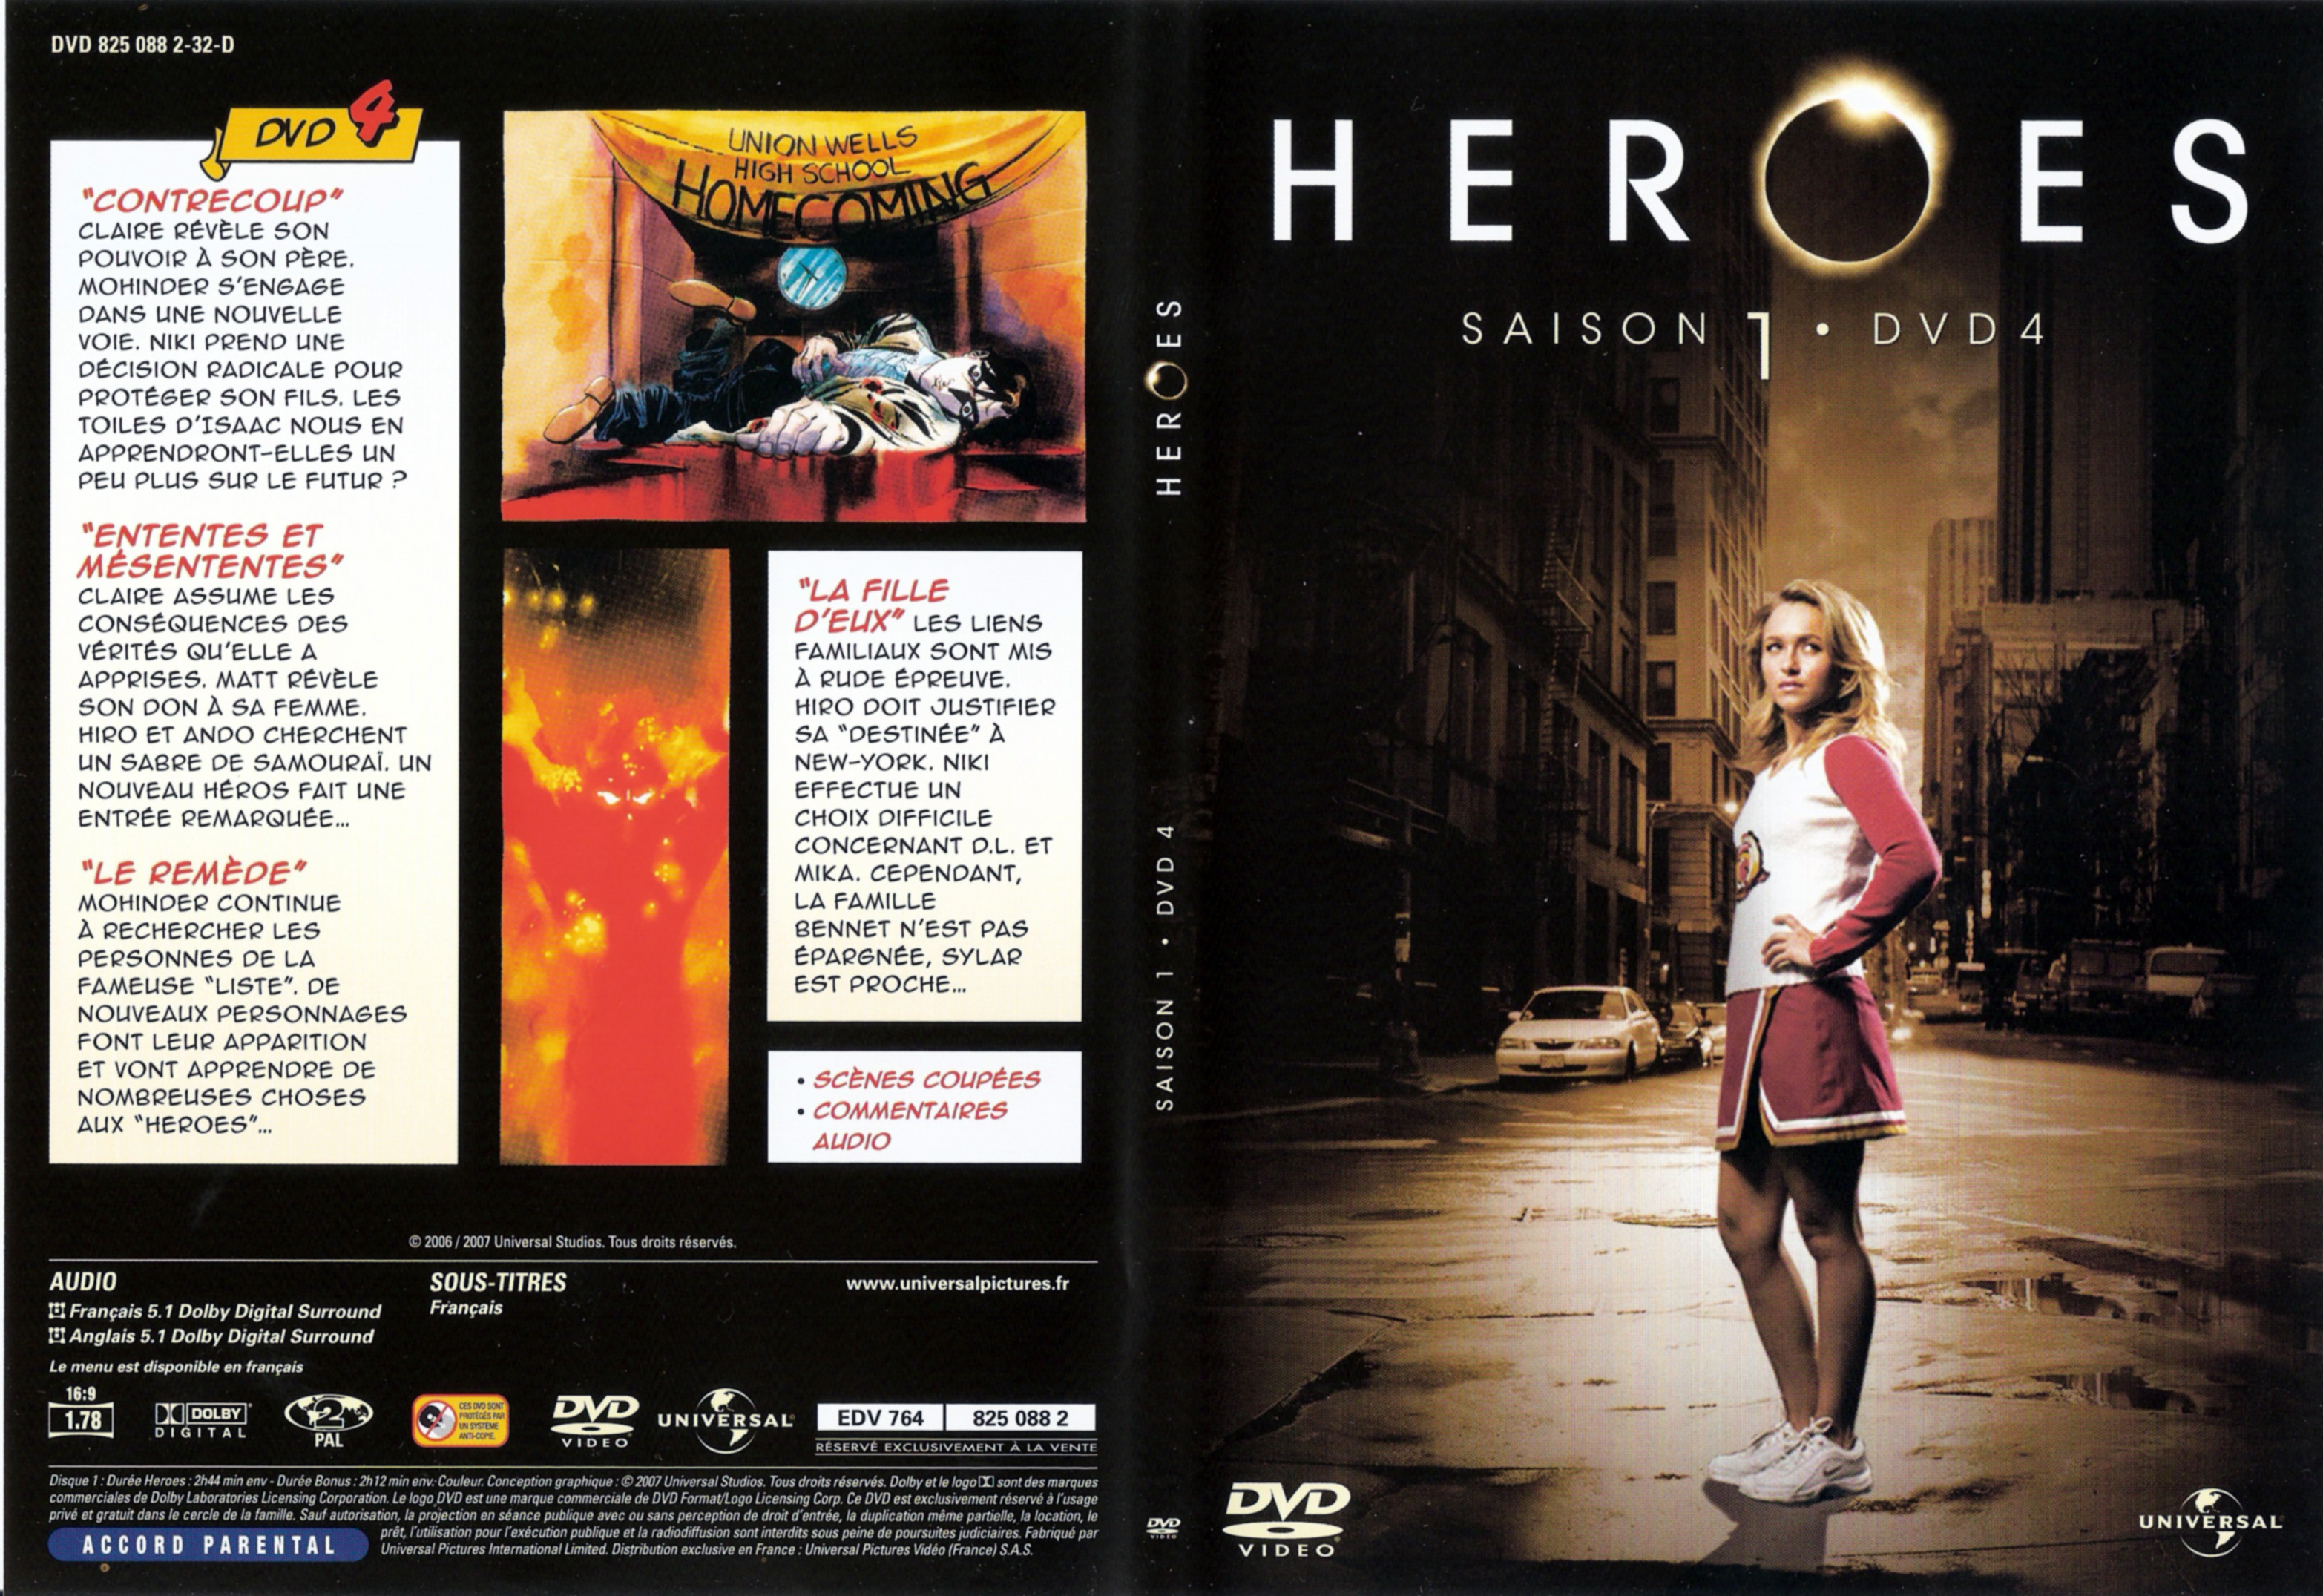 Jaquette DVD Heroes saison 1 DVD 4